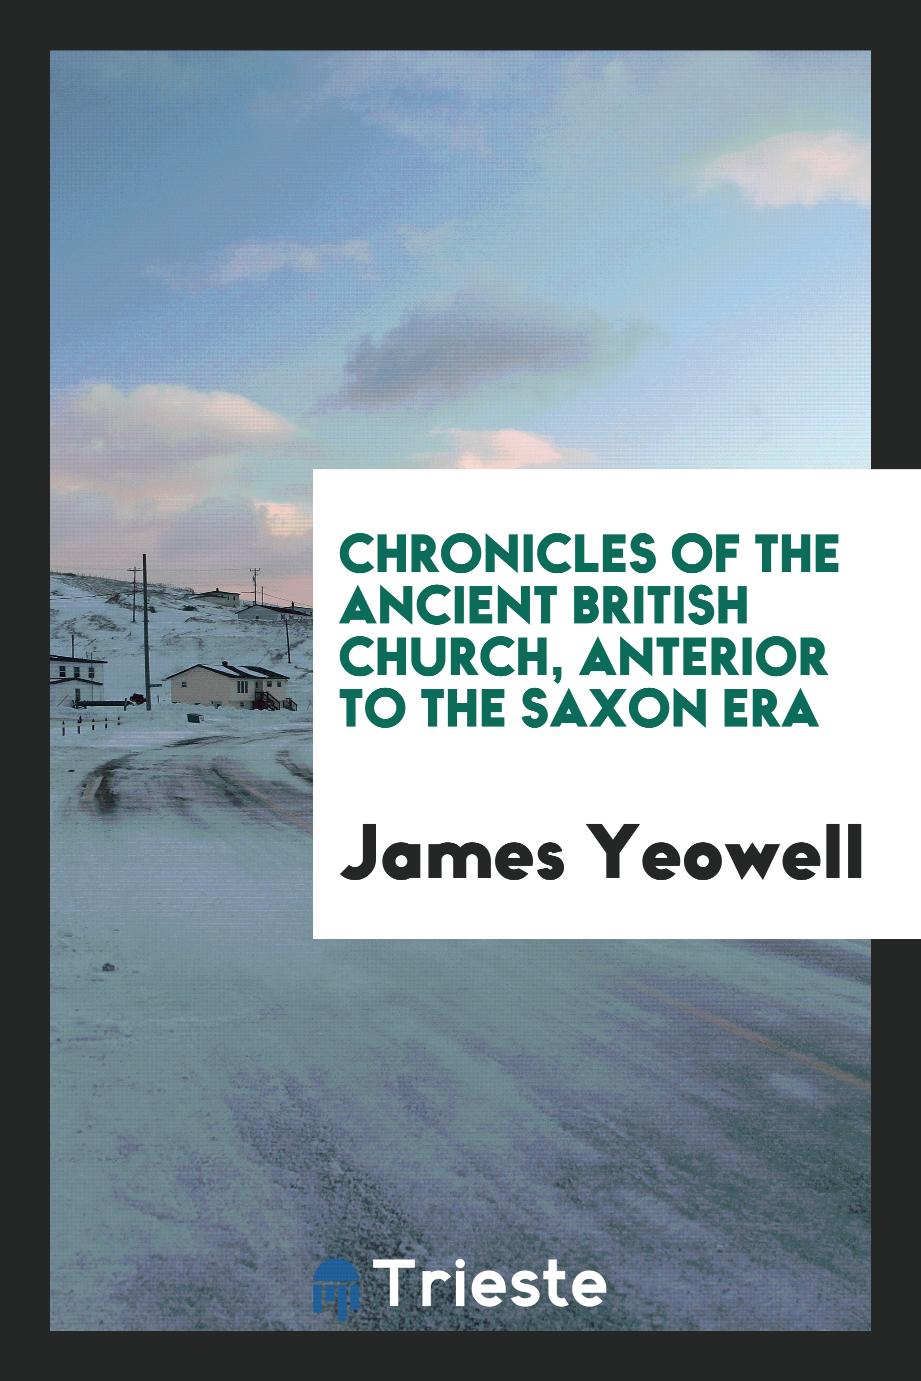 Chronicles of the ancient British church, anterior to the Saxon era